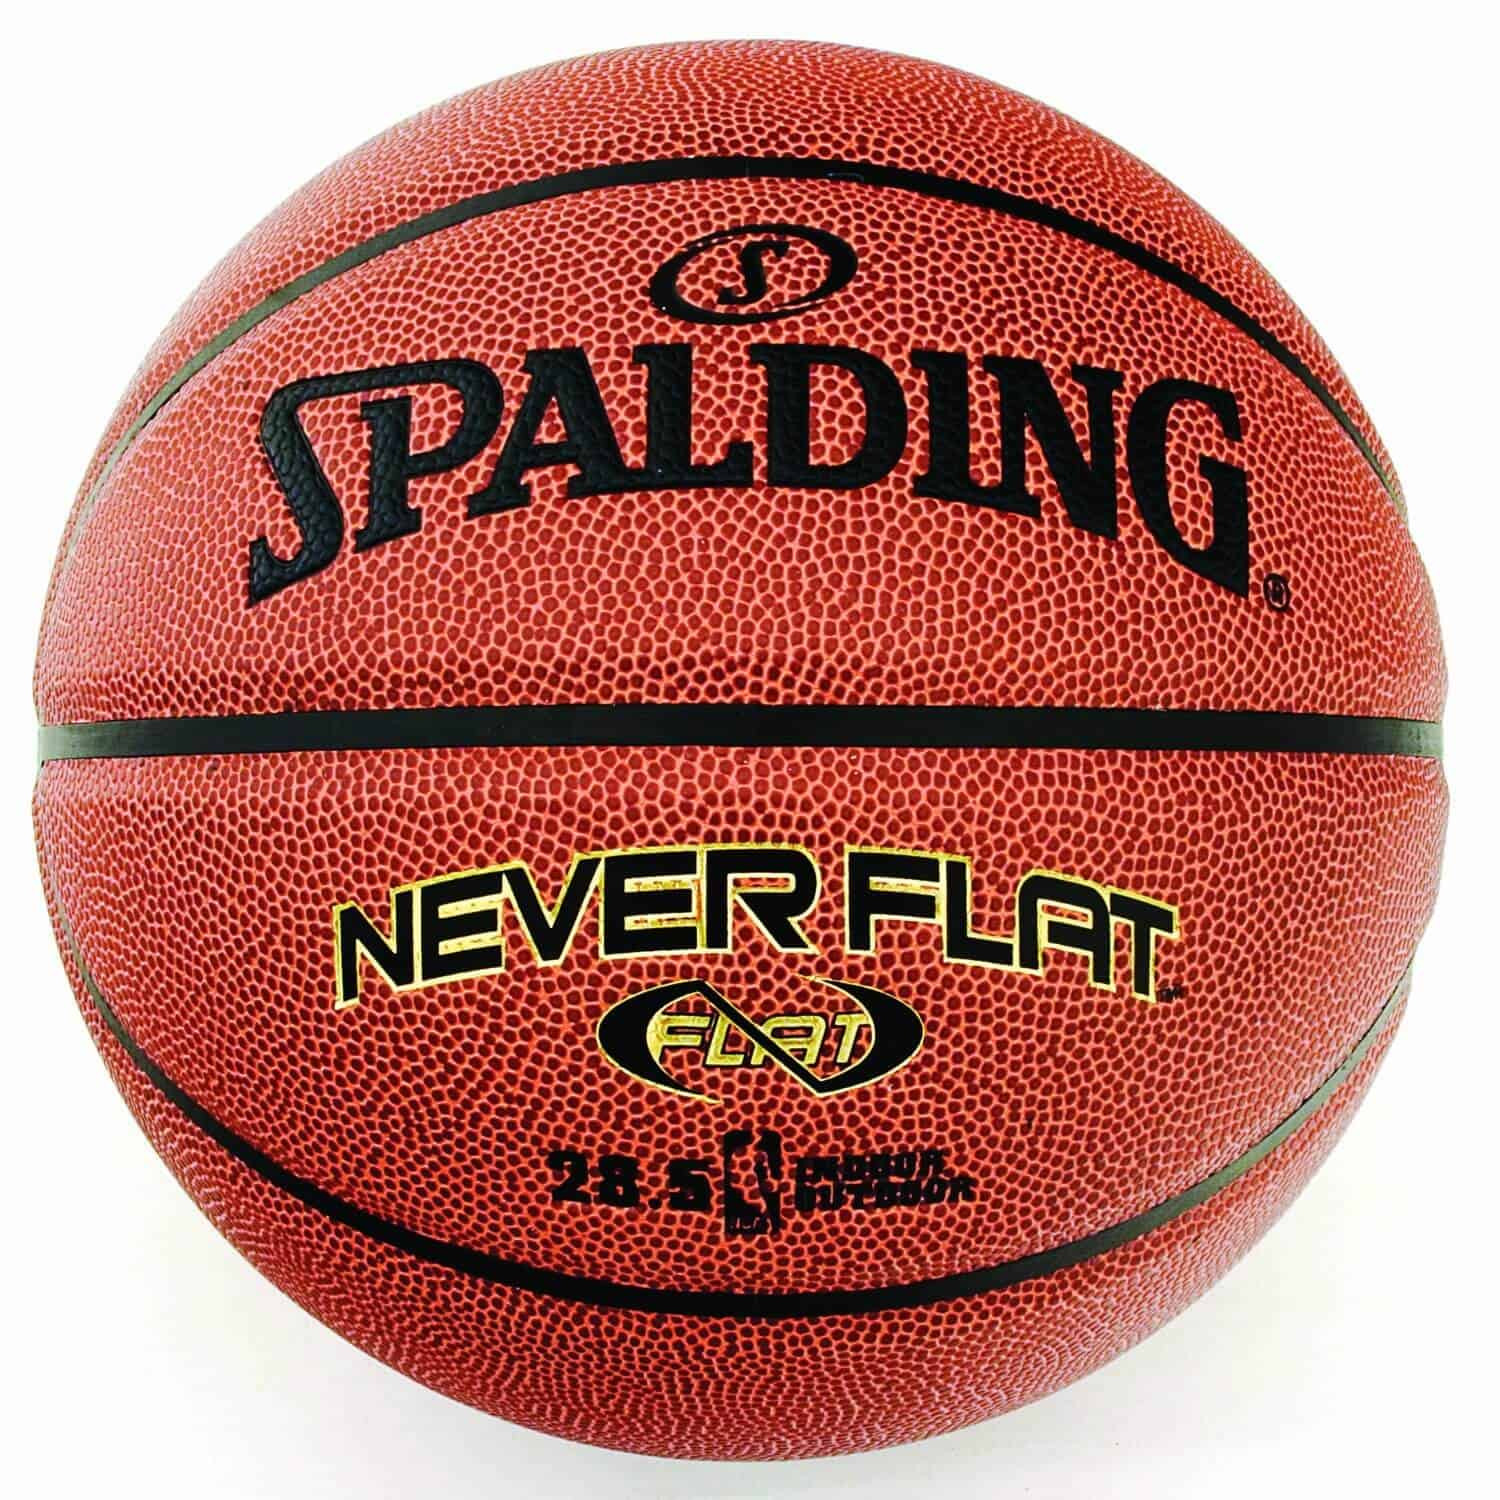 Best ideas about Best Outdoor Basketball
. Save or Pin Spalding Never Flat Basketball Review BestOutdoorBasketball Now.